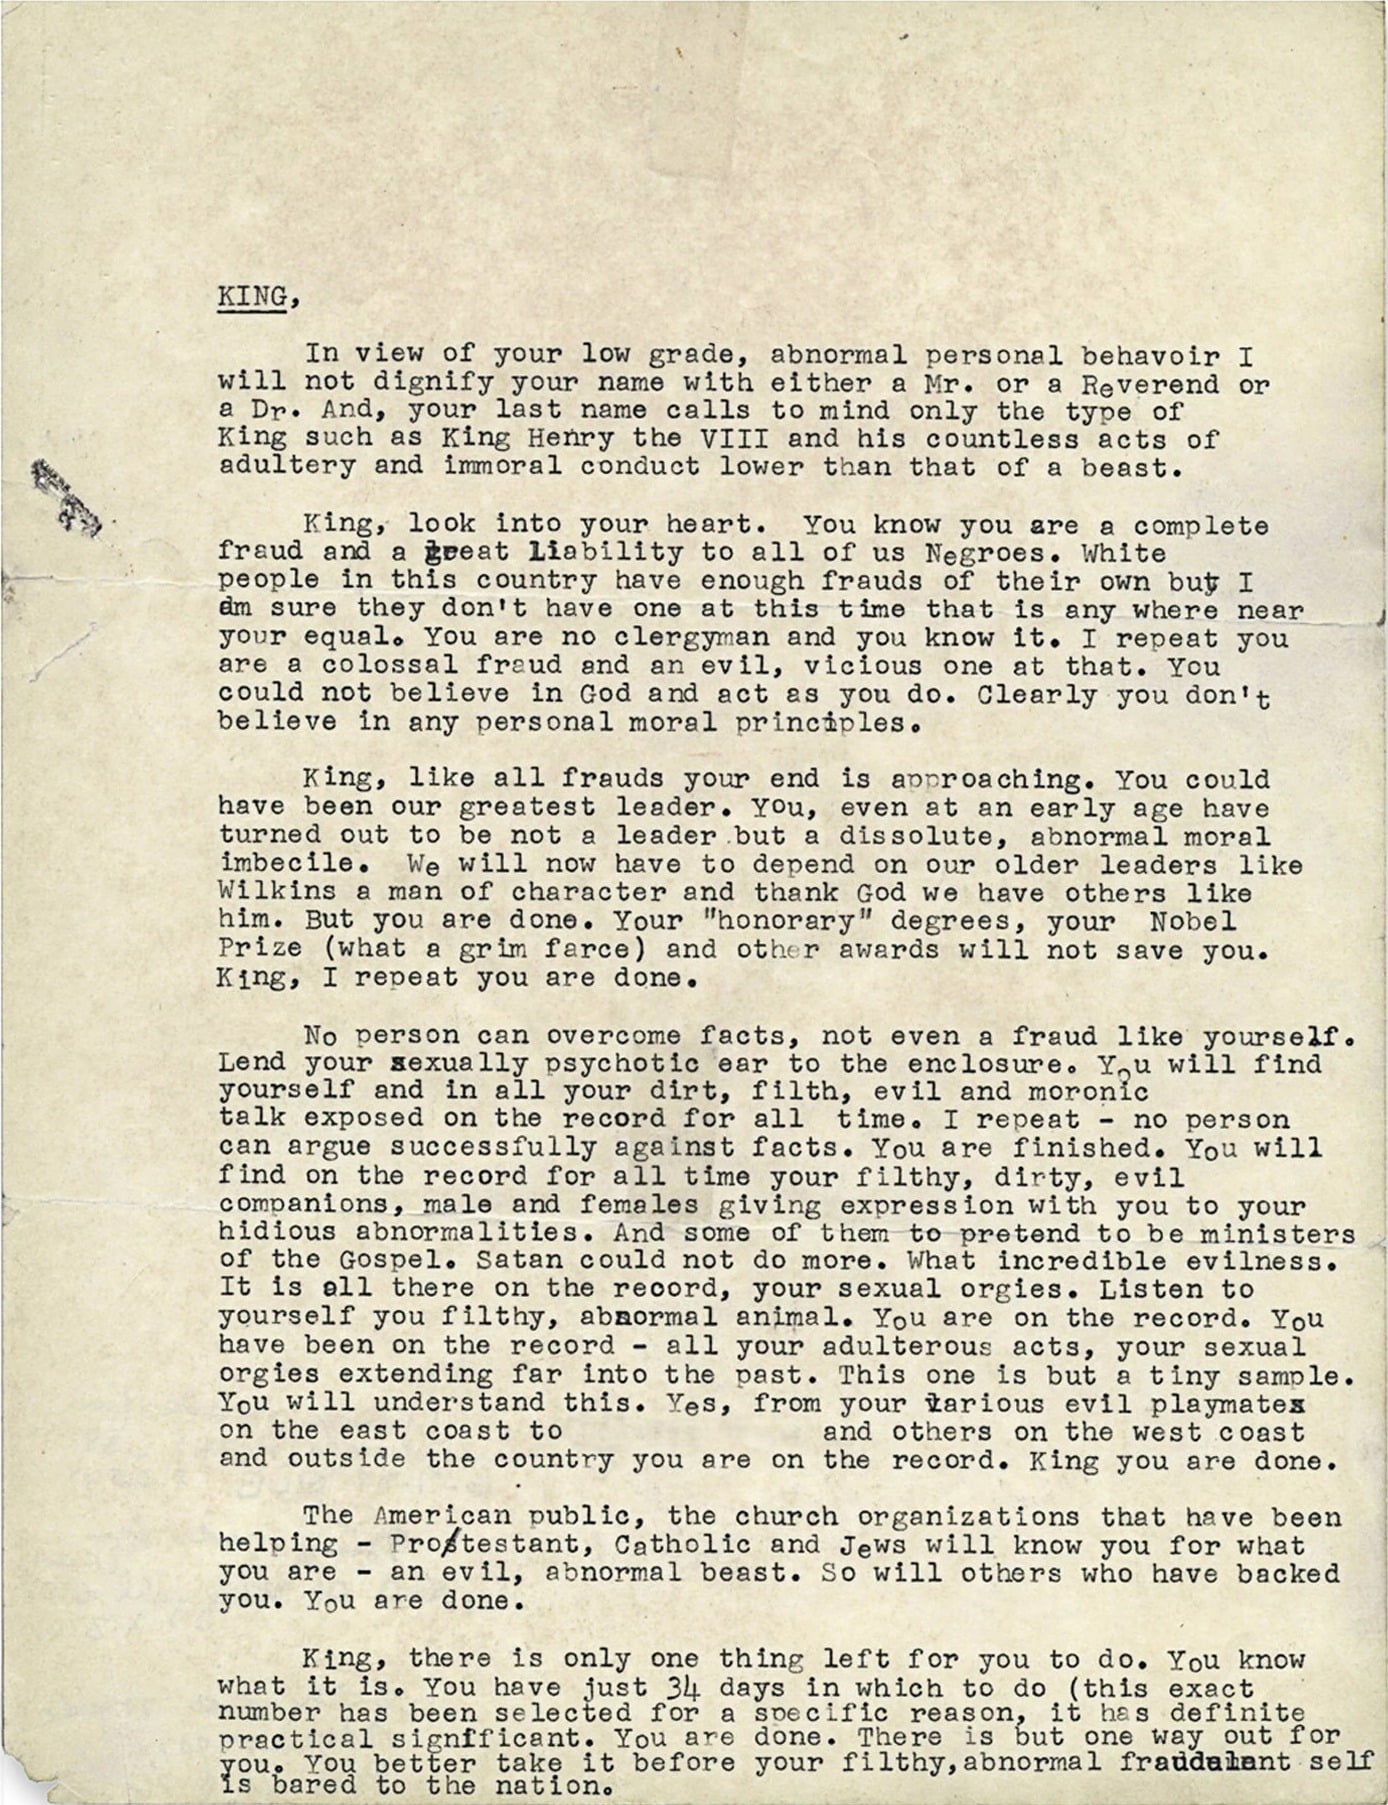 The FBI–King suicide letter